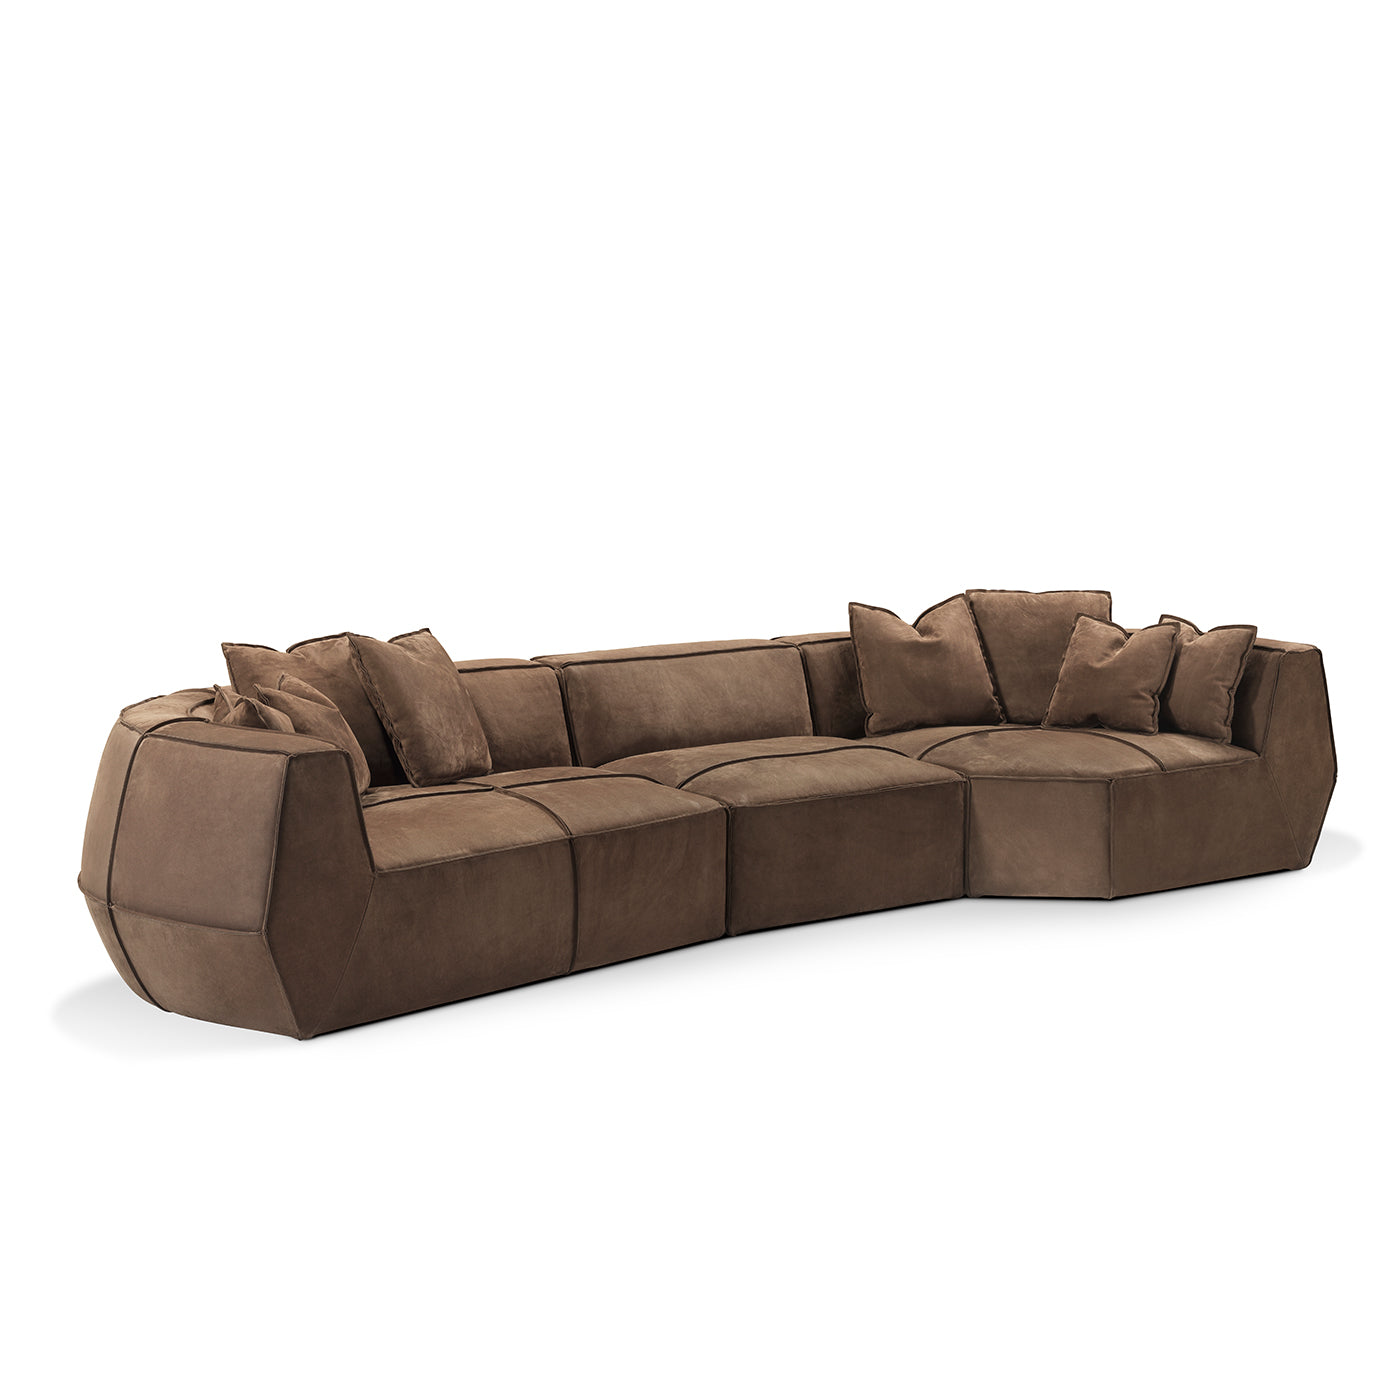 Infinito Large Brown Sofa by Lorenza Bozzoli - Alternative view 4